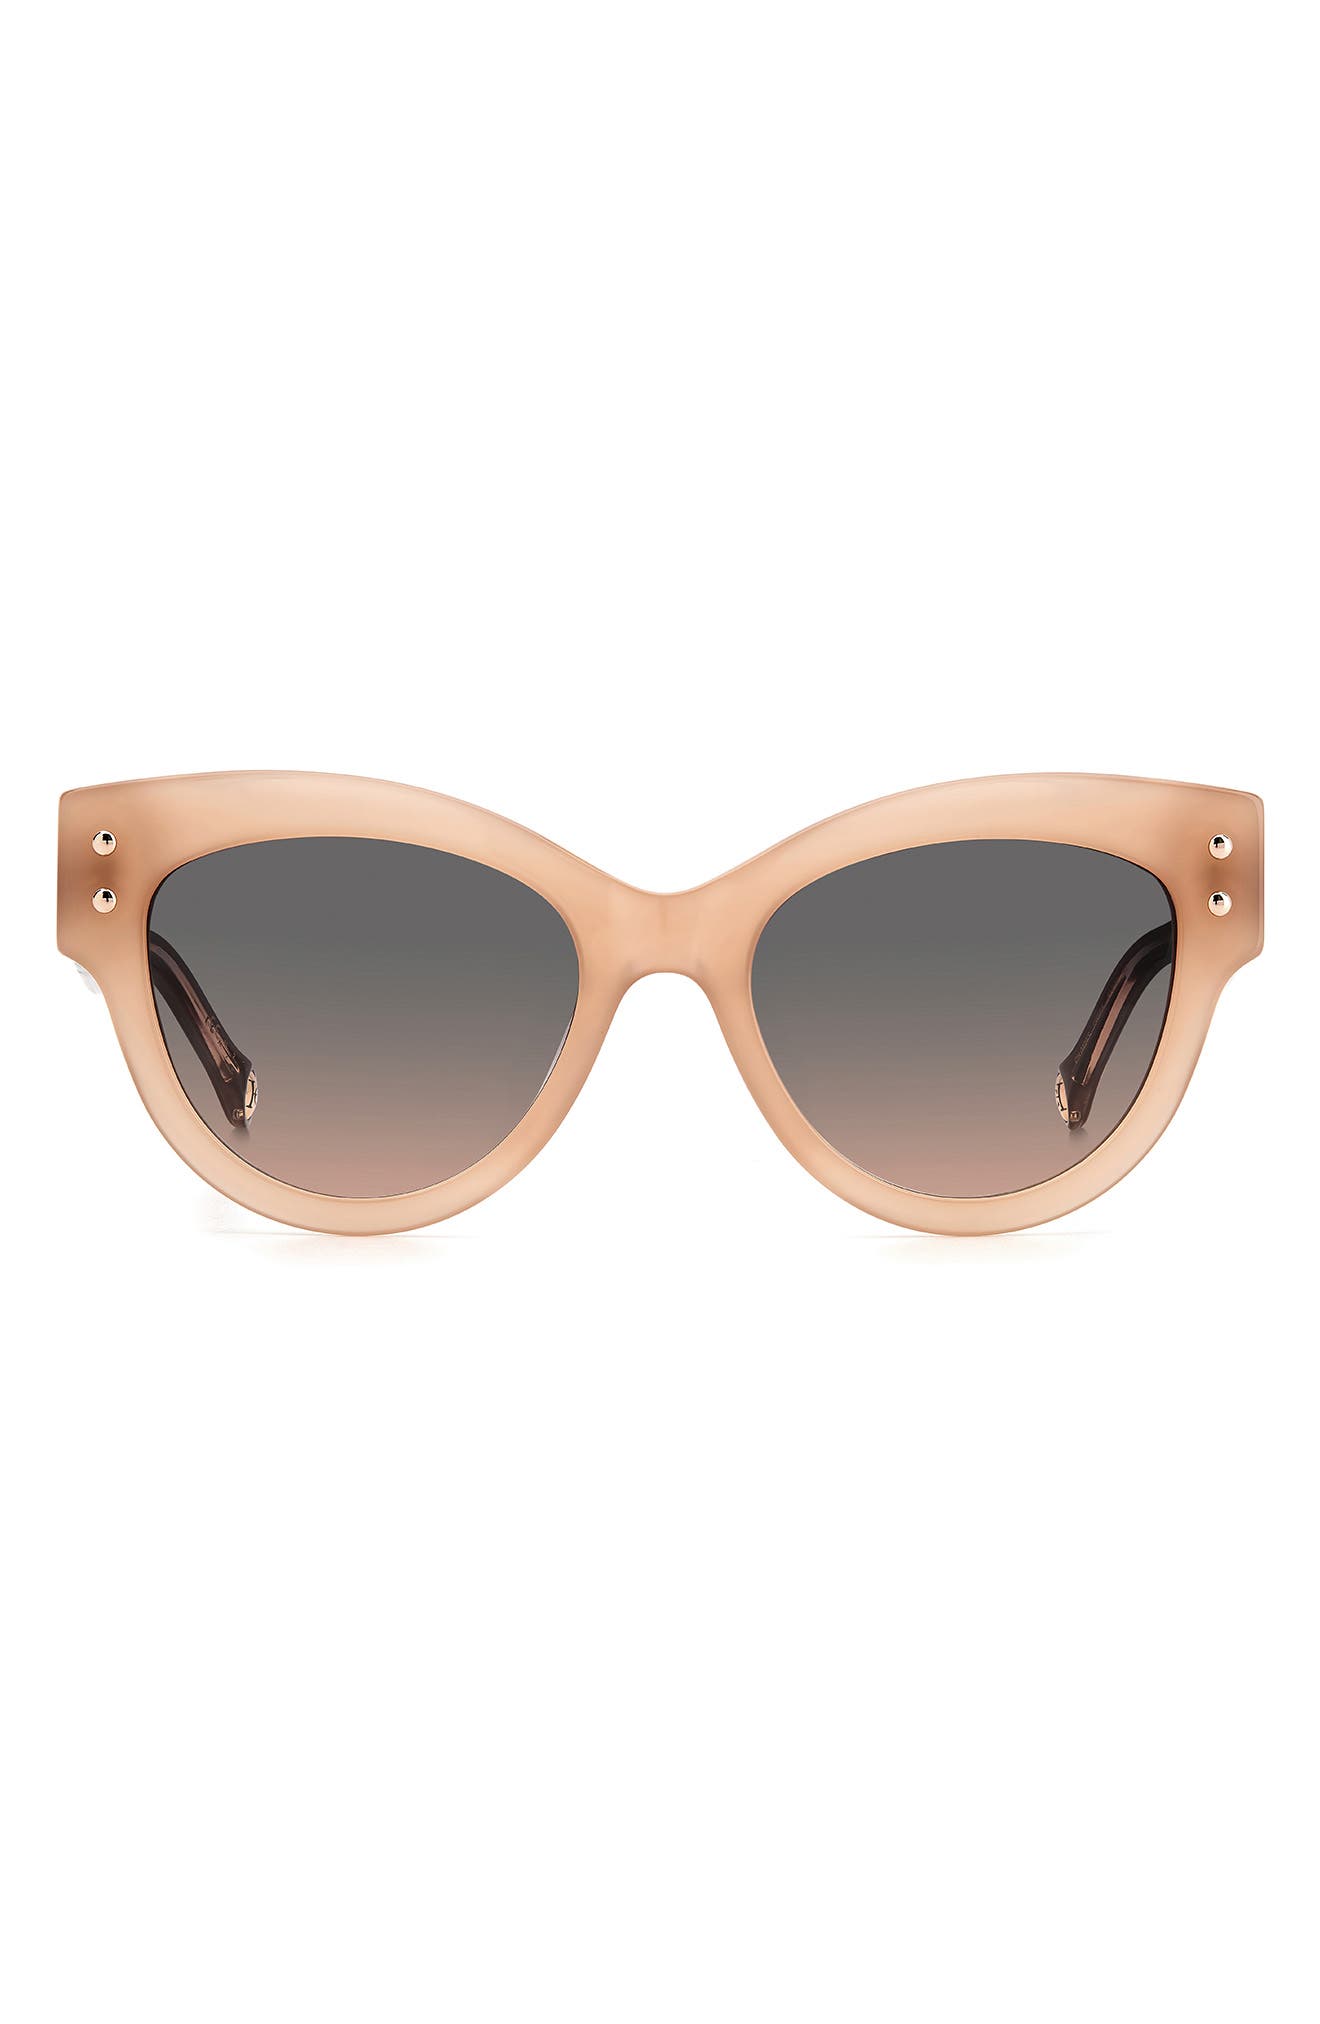 Carolina Herrera 54mm Cat Eye Sunglasses in Nude /Grey Shaded Pink at Nordstrom